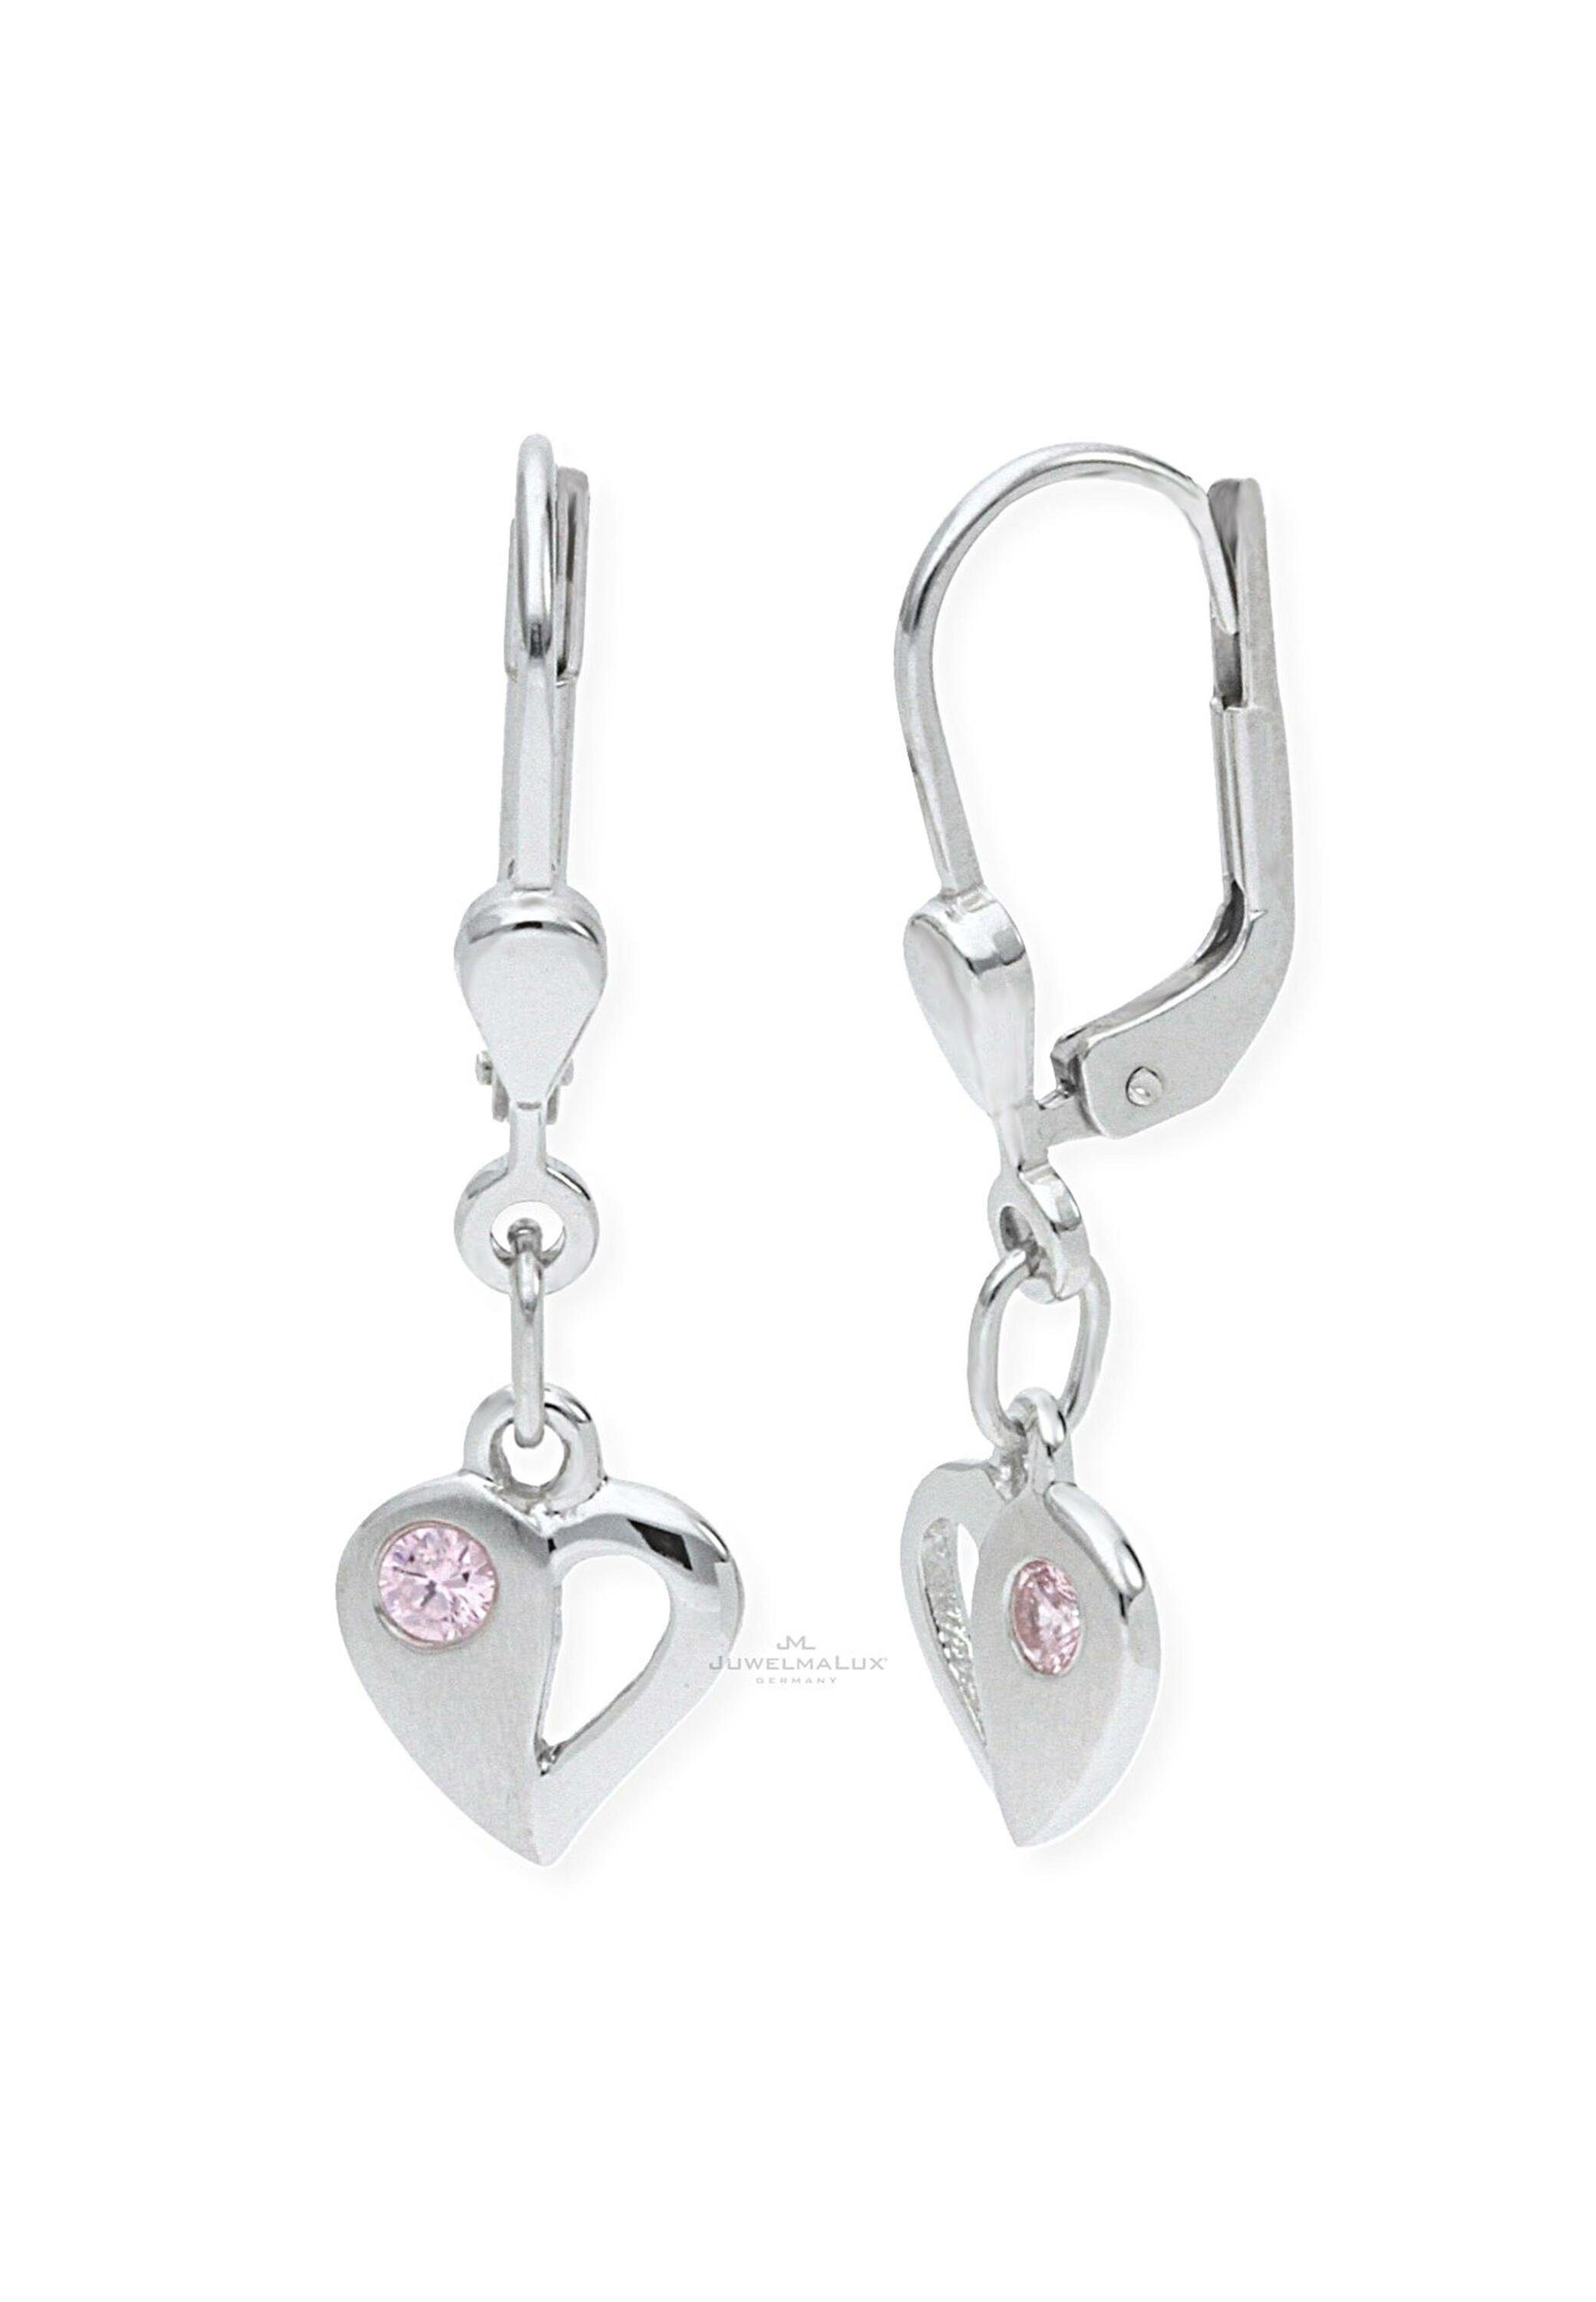 Ohrhänger Silber mit Zirkonia Herz Pink Paar in Kinderohrringe JuwelmaLux